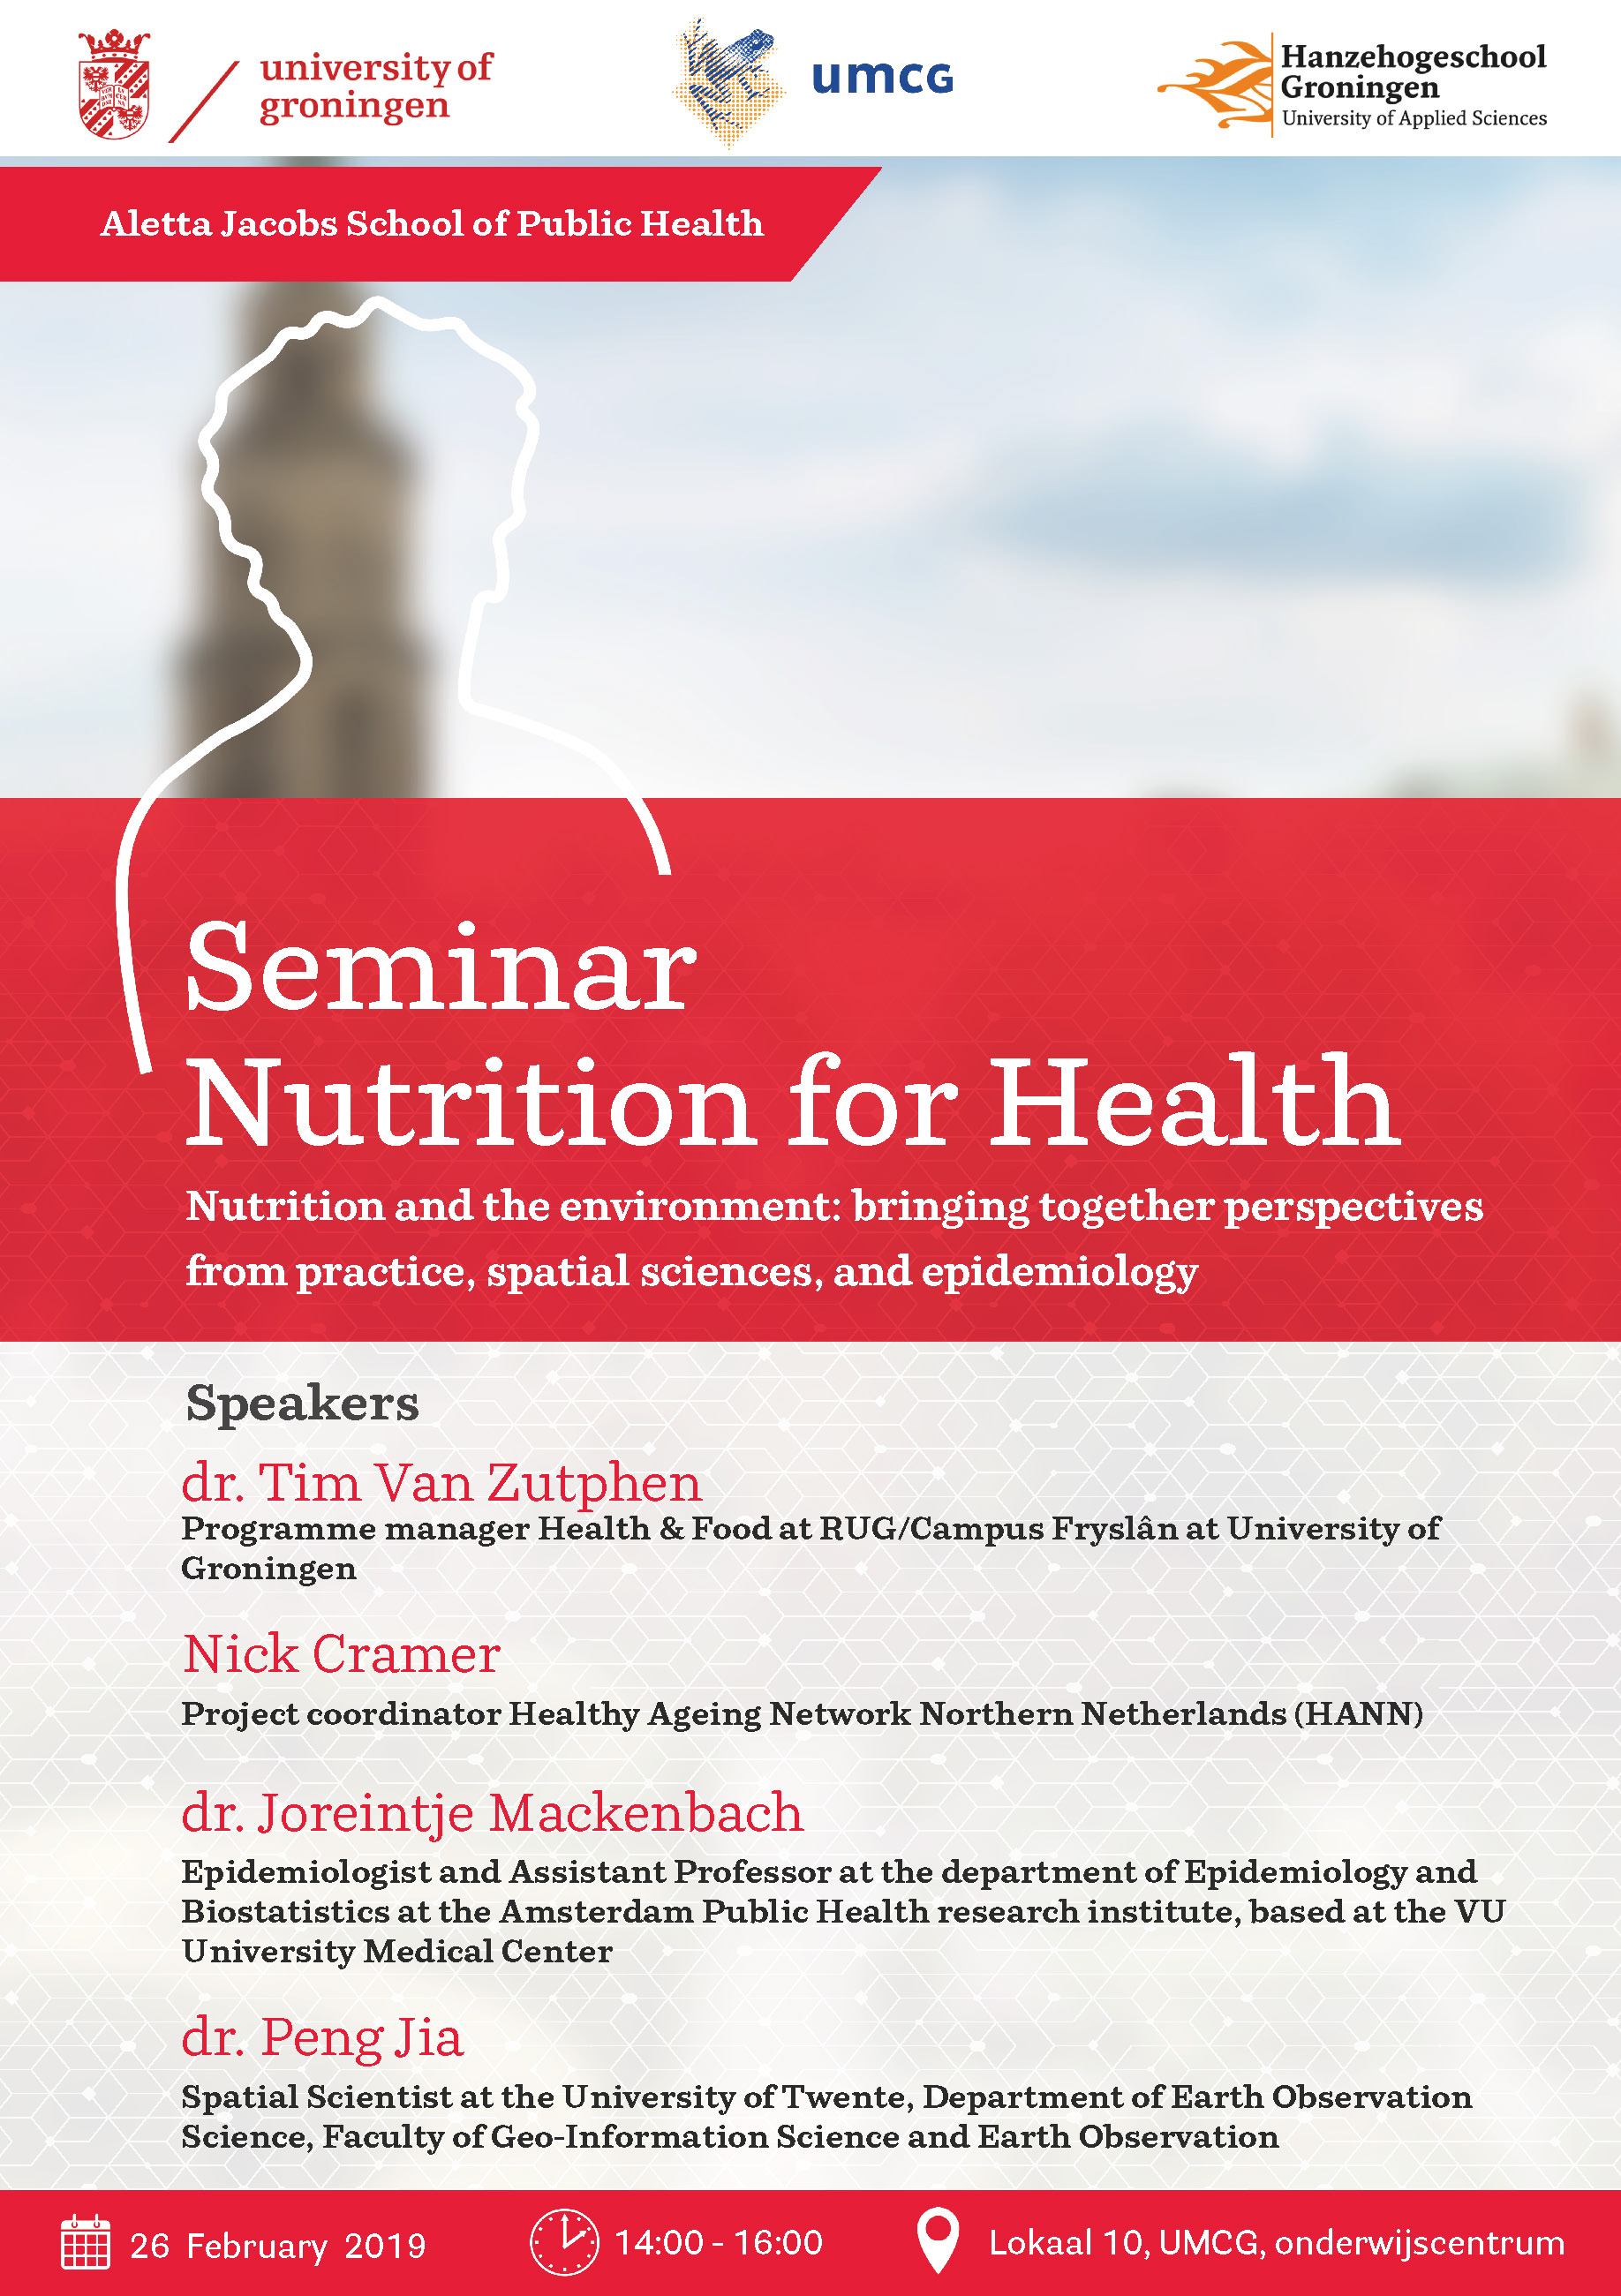 Nutrition for Health seminar